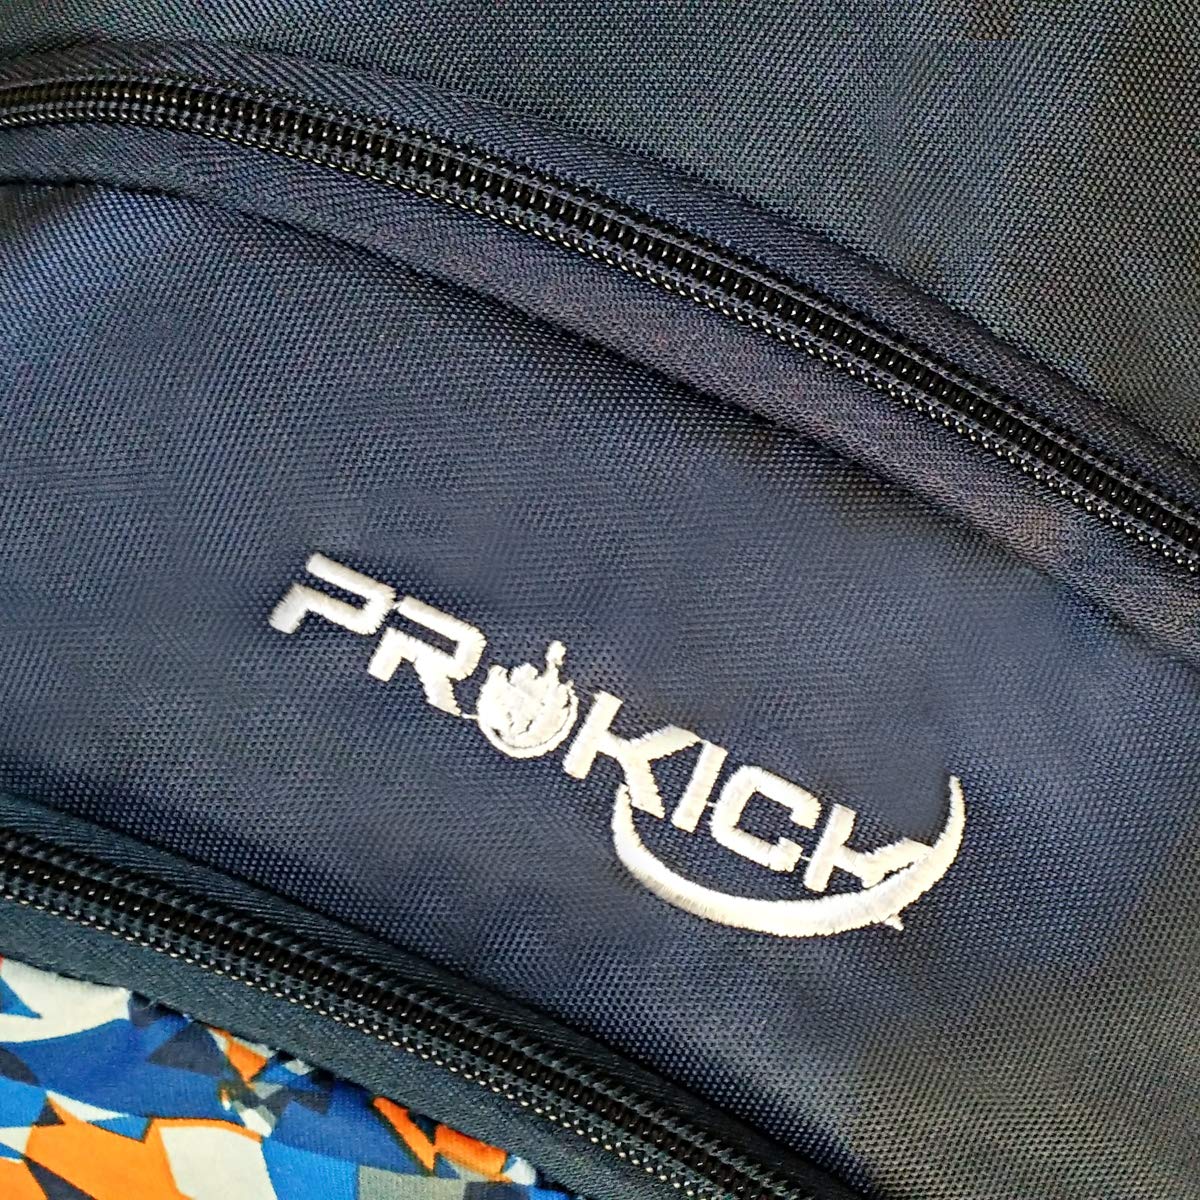 Prokick 30L Waterproof Casual Backpack | School Bag - Mix Match - Best Price online Prokicksports.com